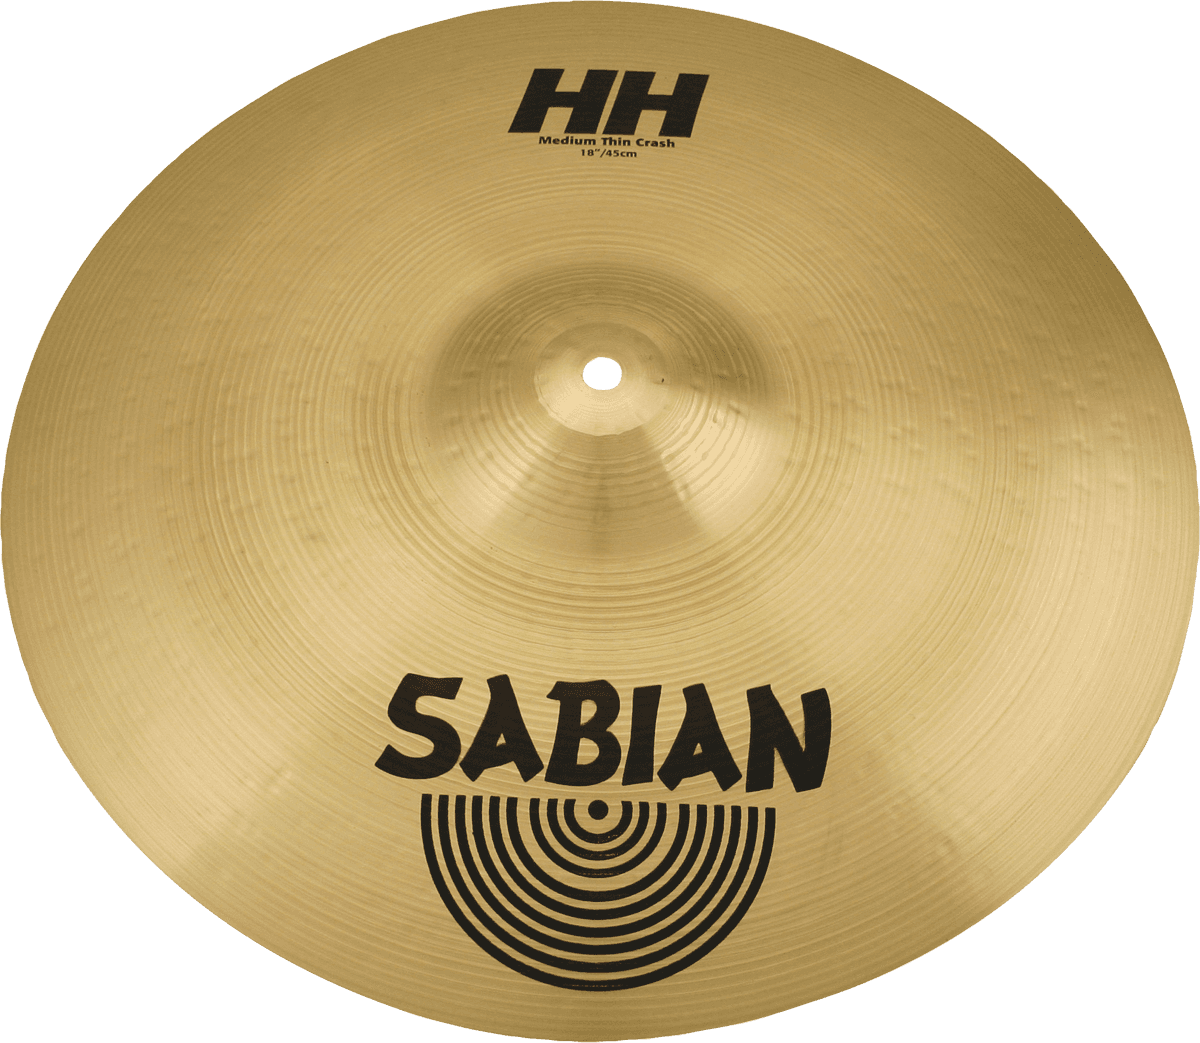 Sabian Hh Medium-thin Crash - 18 Pouces - Crash cymbal - Main picture